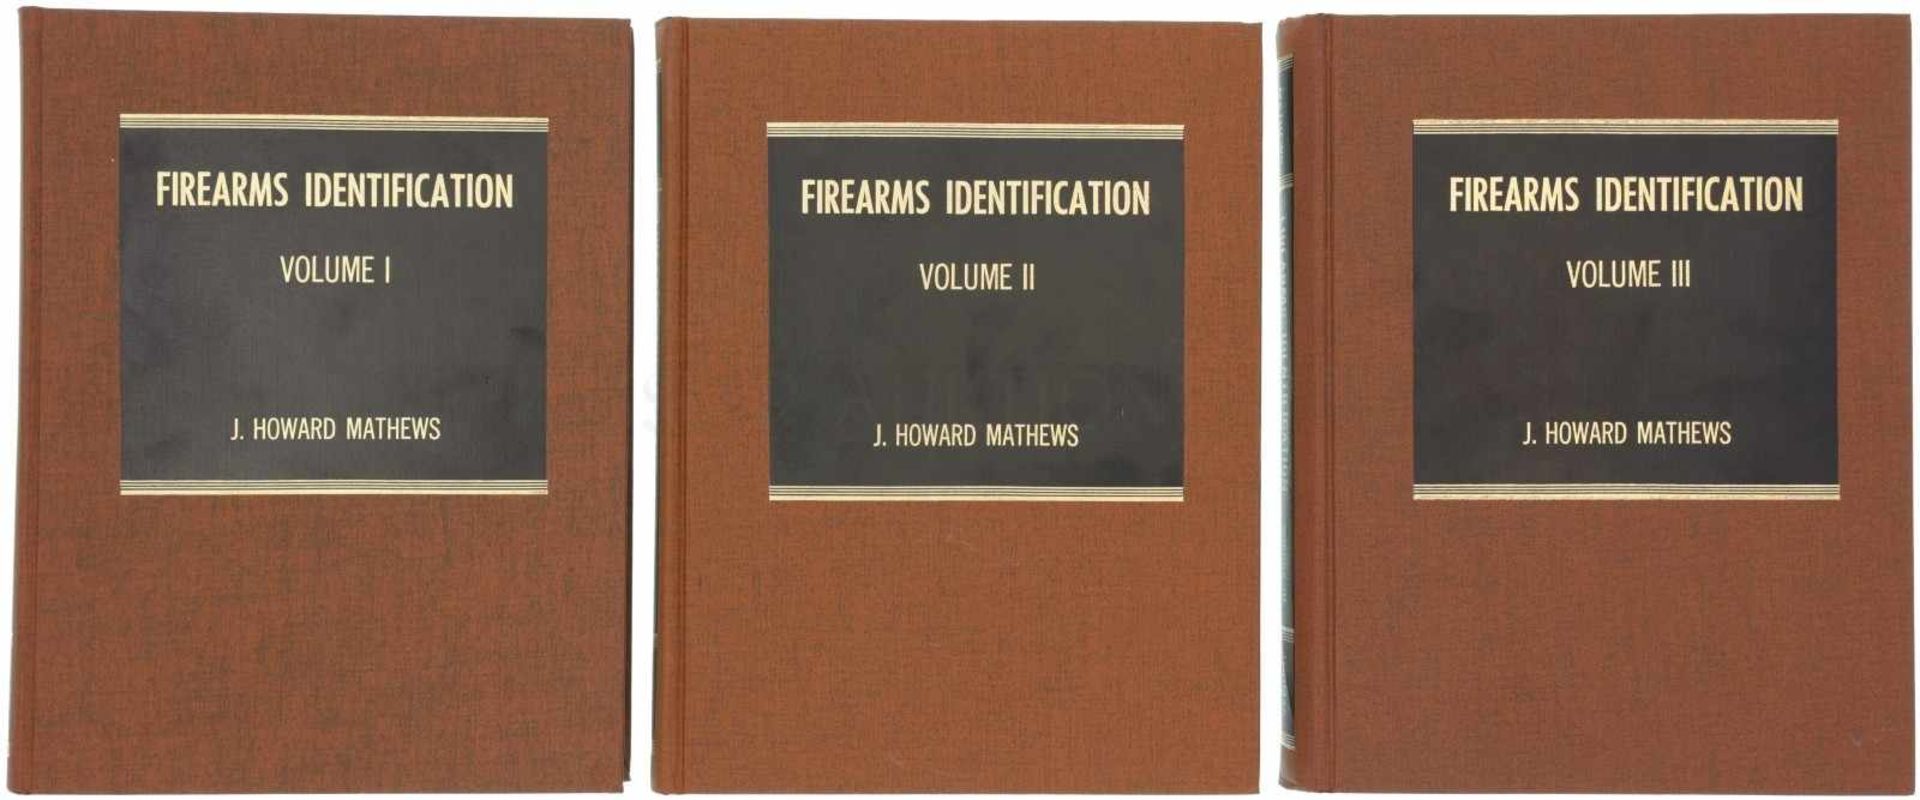 Konvolut von 3 Bänden "Firearms Identification", Autor J. Howard Mathews 1. Volume I, The laboratory